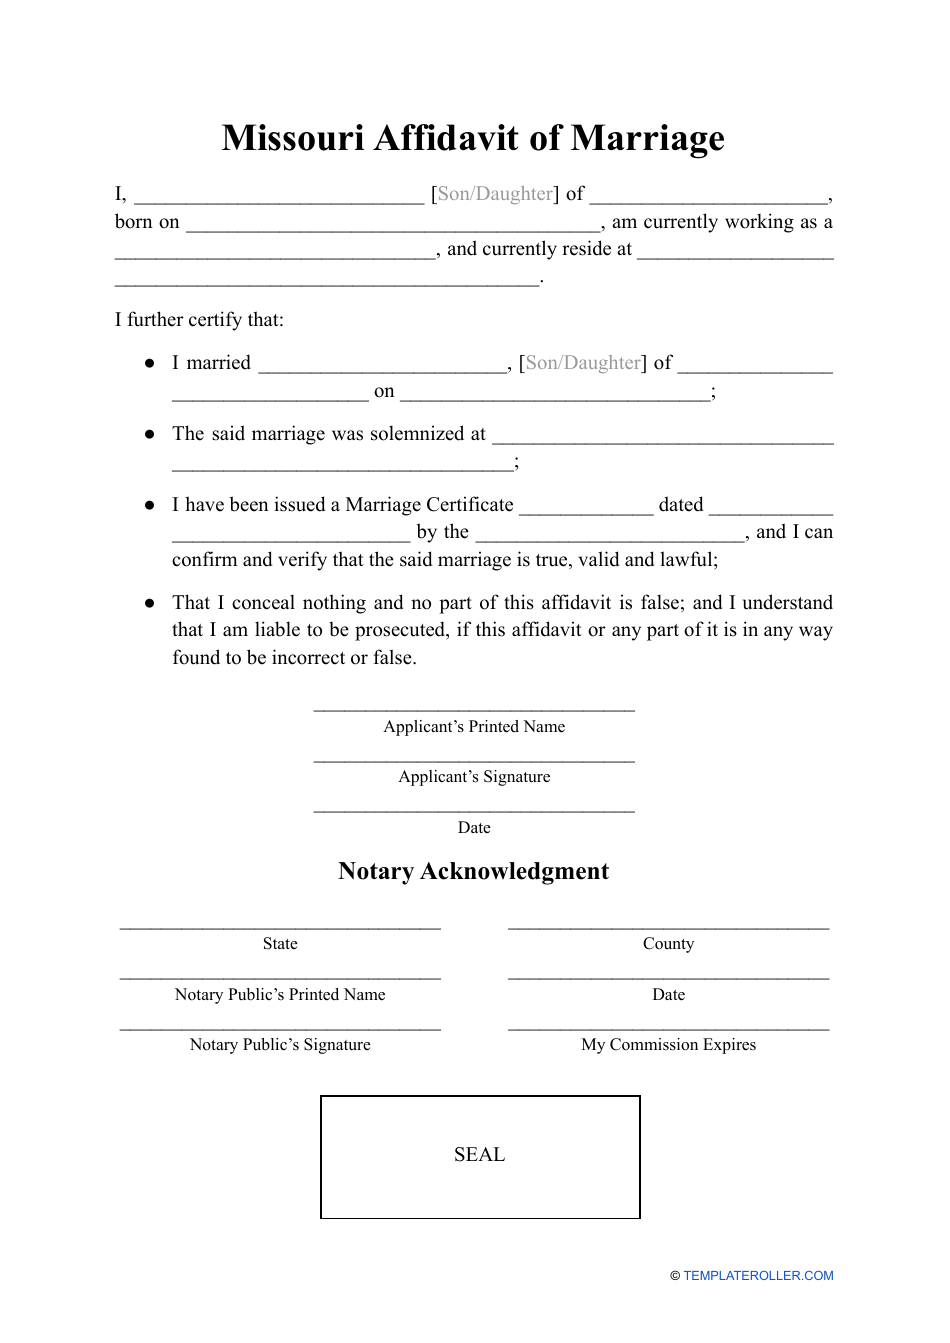 Affidavit of Marriage - Missouri, Page 1